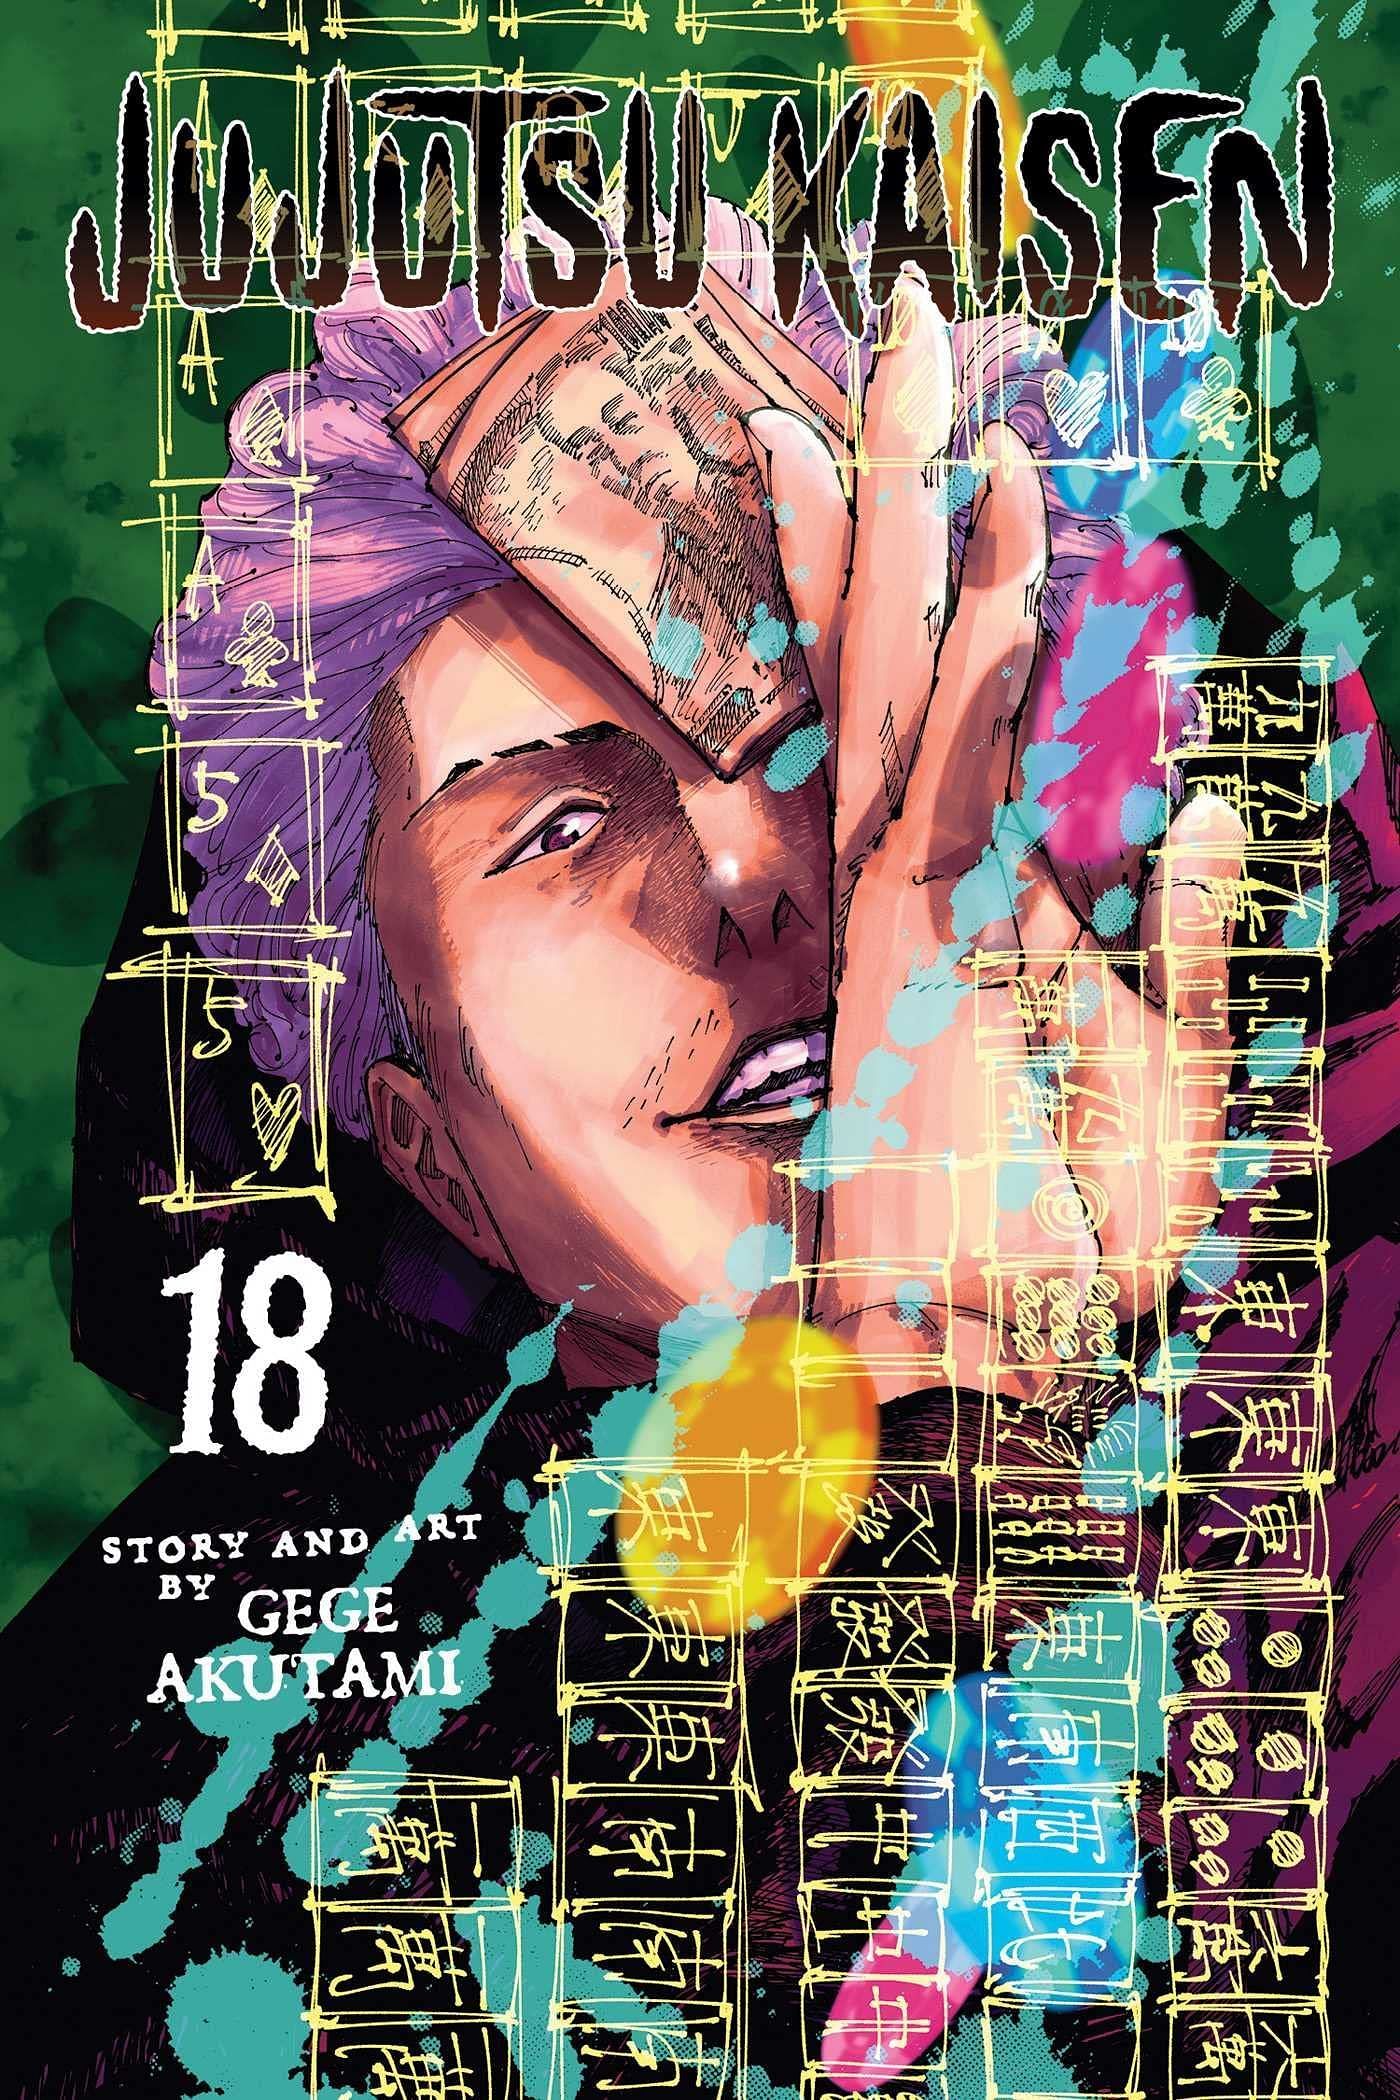 Jujutsu Kaisen volume 18 cover (Image via Gege Akutami/VIZ)